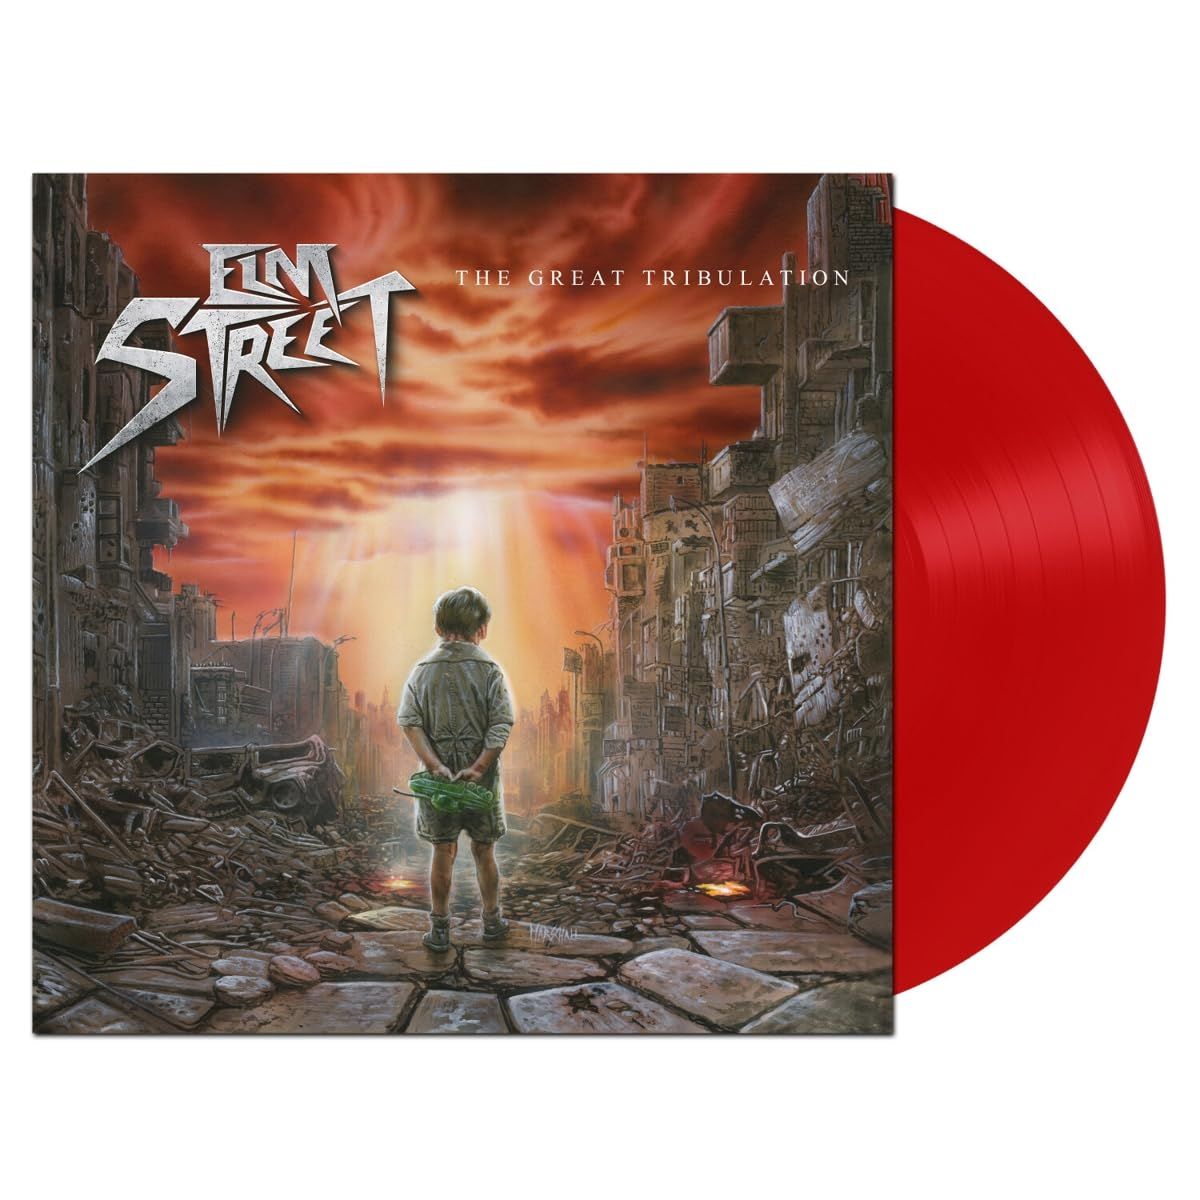 Elm Street - Great Tribulation, The (Ltd. Ed. Red vinyl - 250 copies) - Vinyl - New